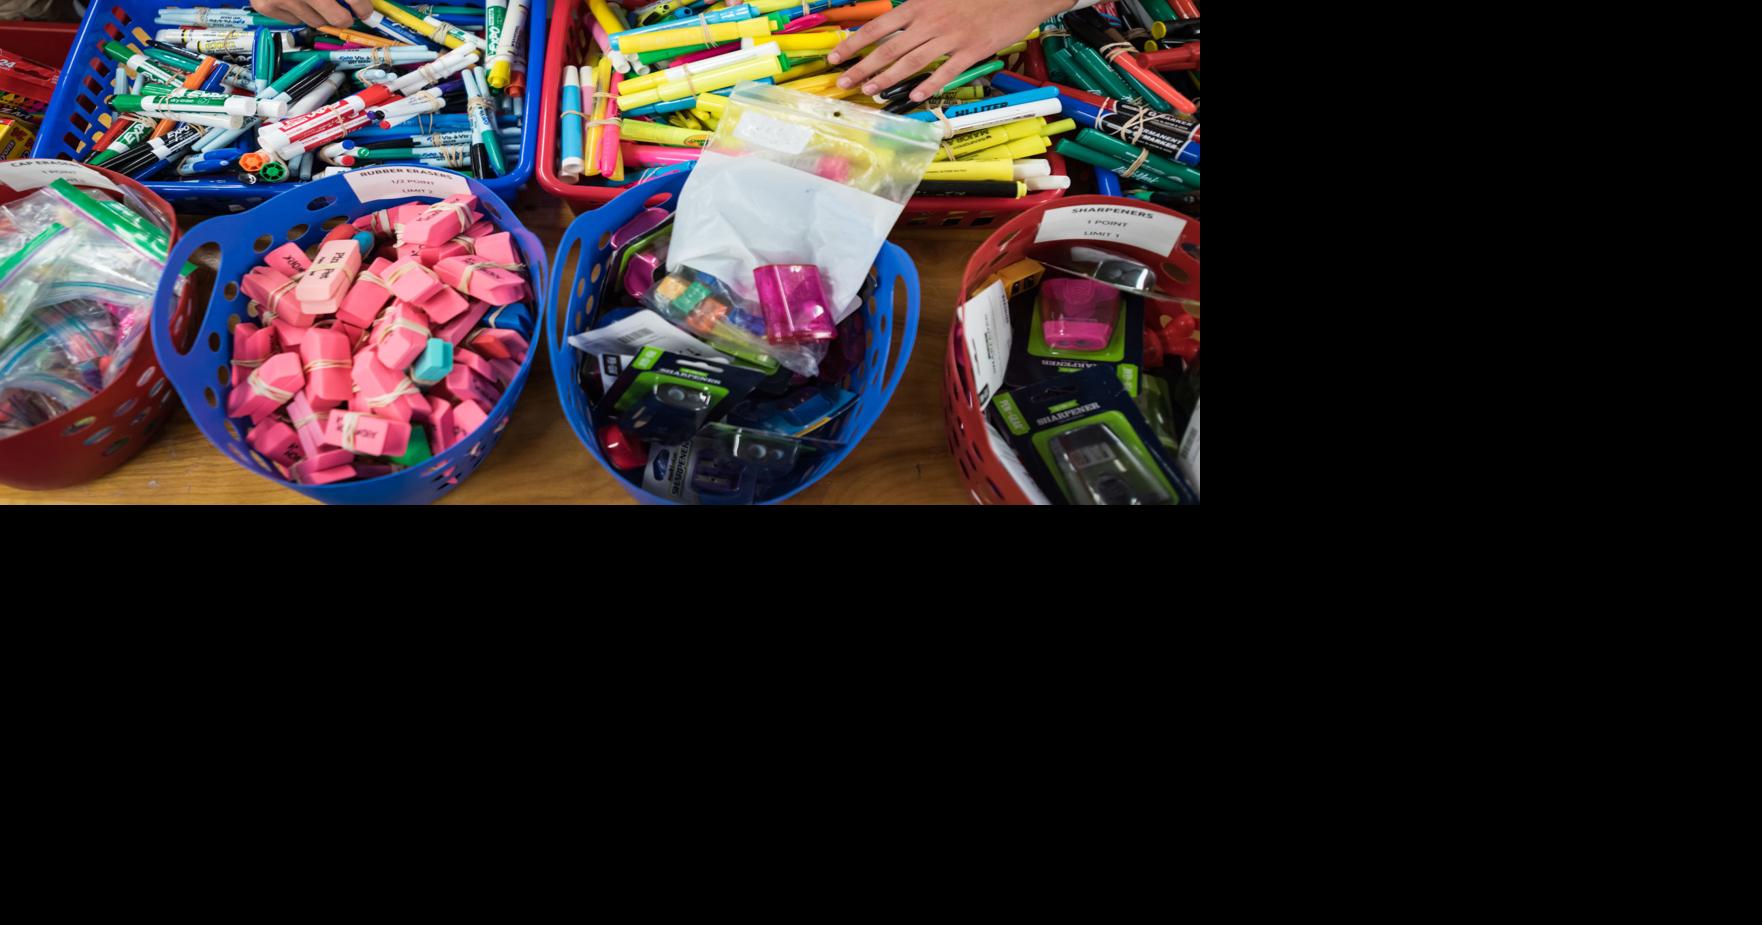 Educator Warehouse in WinstonSalem offers free supplies for teachers